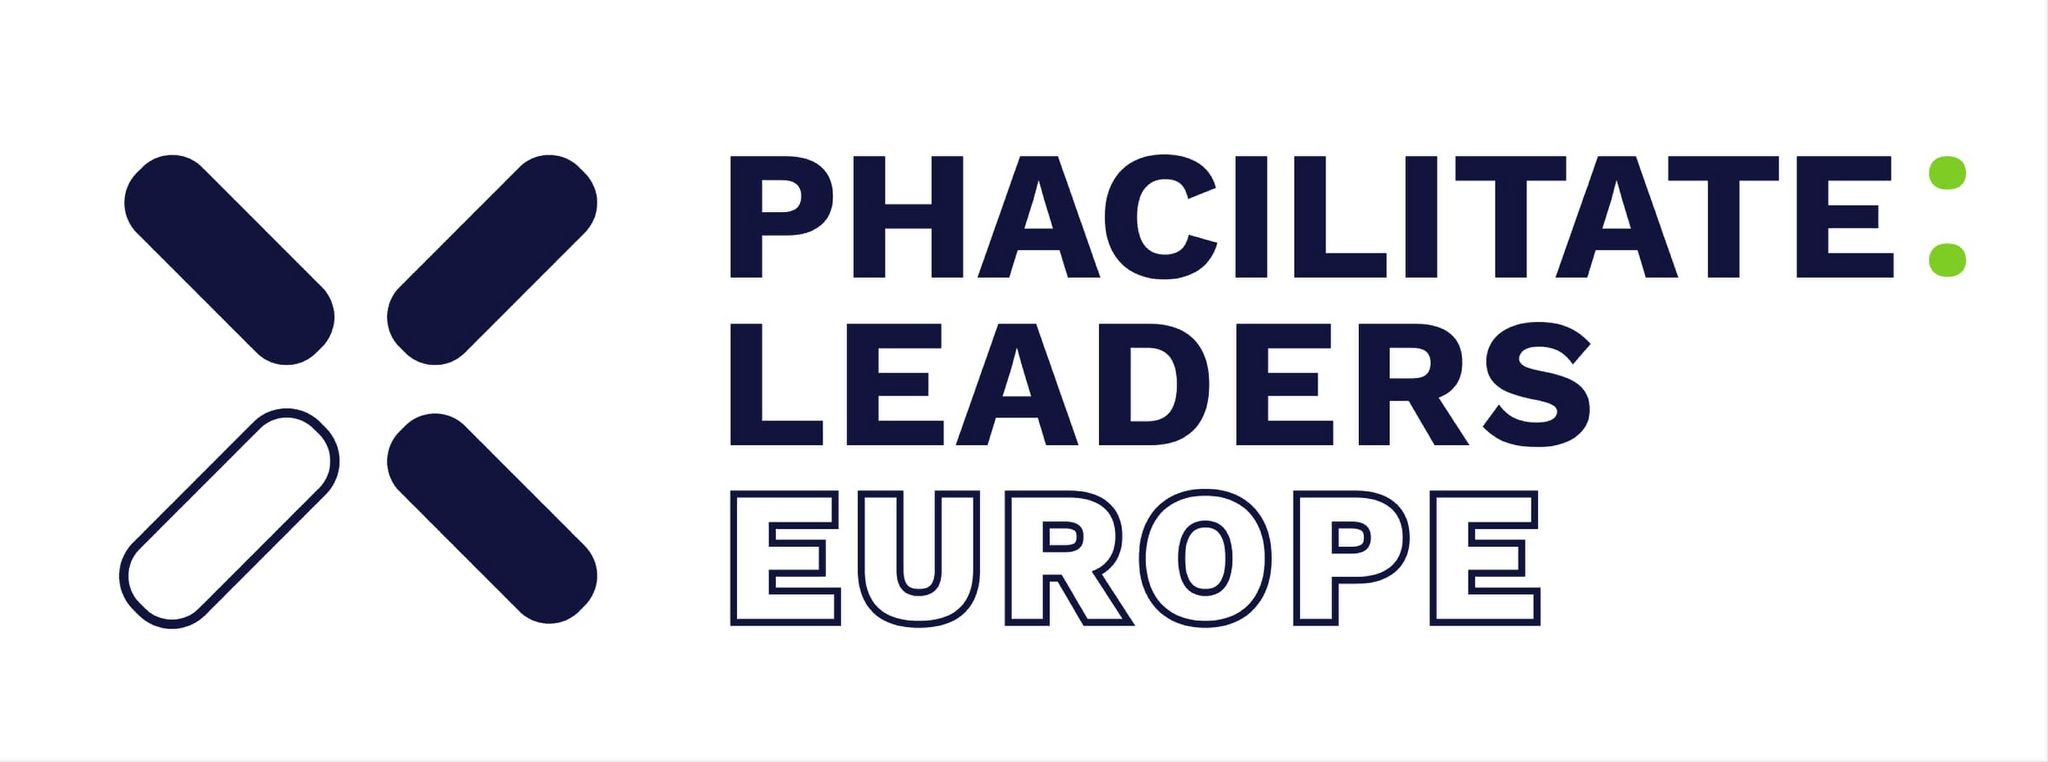 Phacilitate Leaders Europe 2018